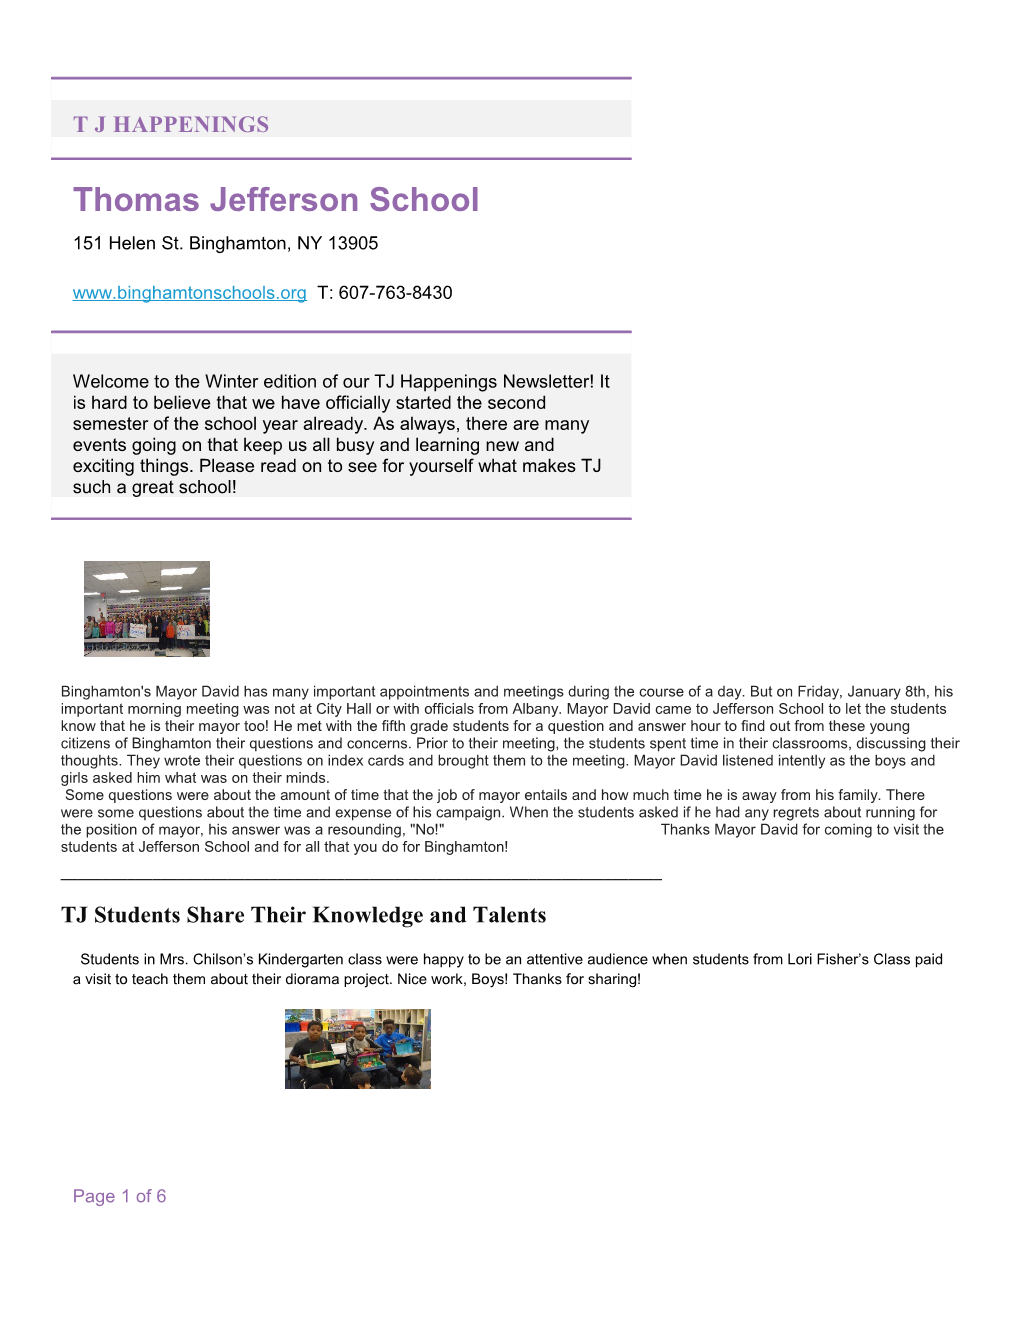 Thomas Jefferson School